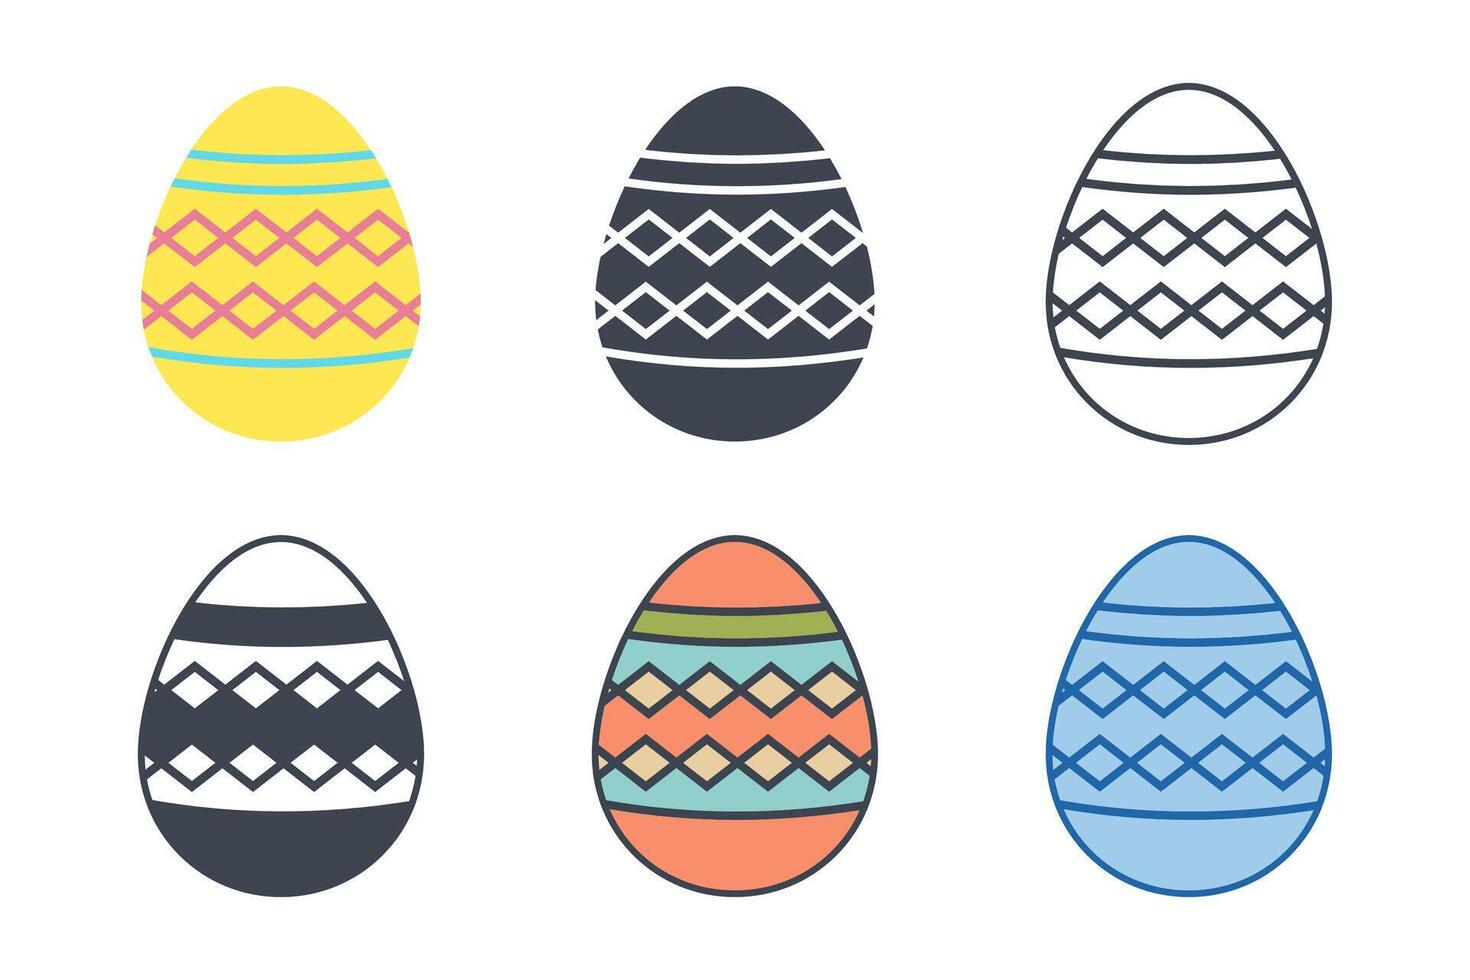 Pascua de Resurrección día festival. Pascua de Resurrección huevos íconos en blanco antecedentes. vector ilustración